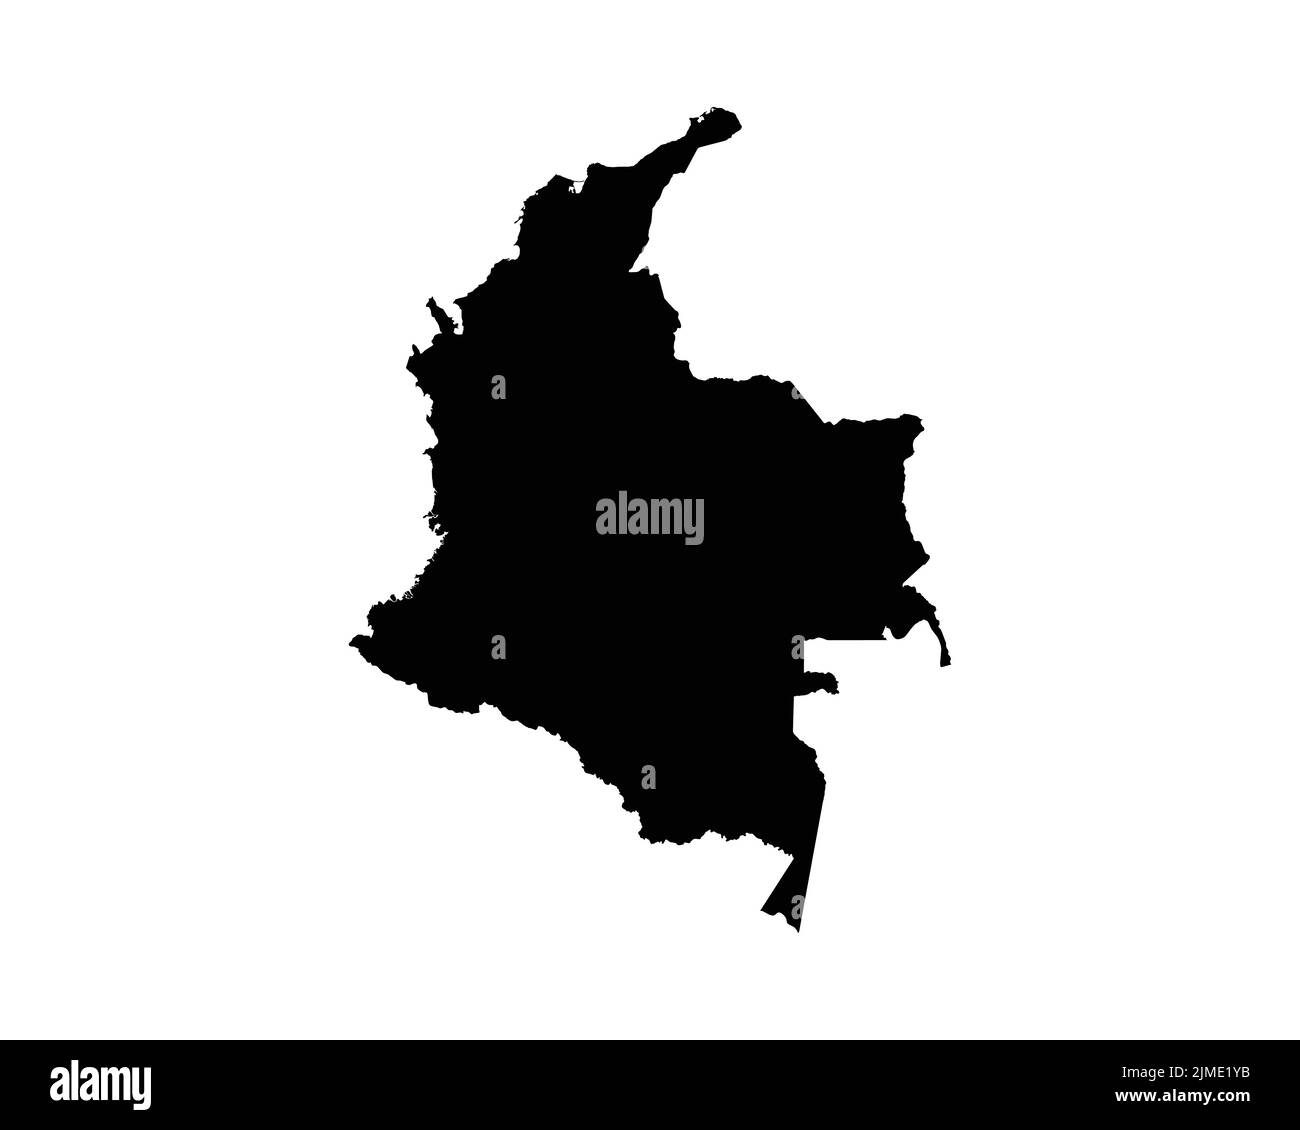 Karte Kolumbien. Kolumbianische Landkarte. Schwarz-Weiß nationaler Umriss Geographie Grenze Grenzform Territorium EPS Vektorgrafik Clipart Stock Vektor